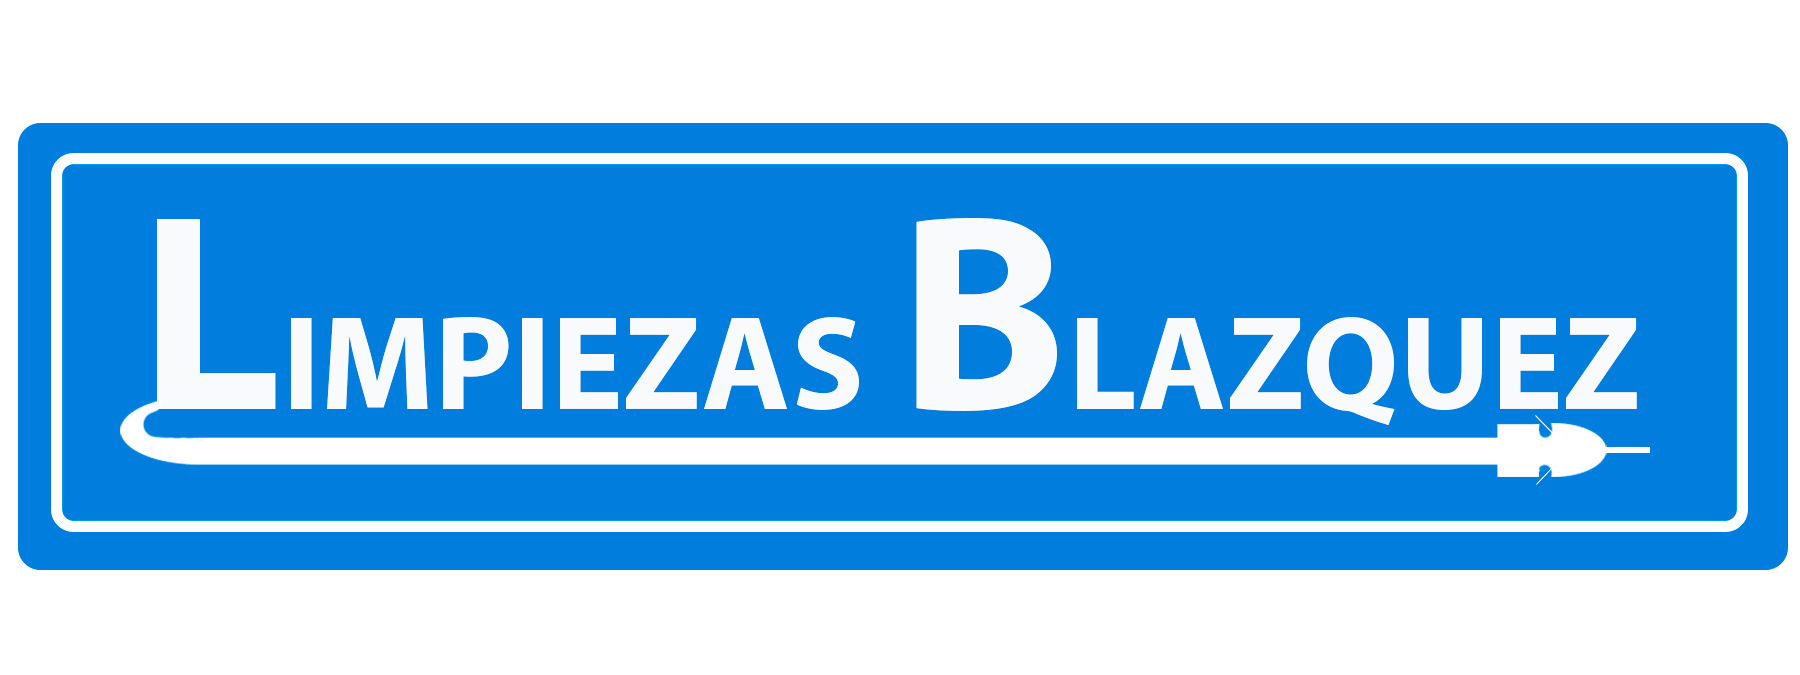 Limpiezas Blazquez